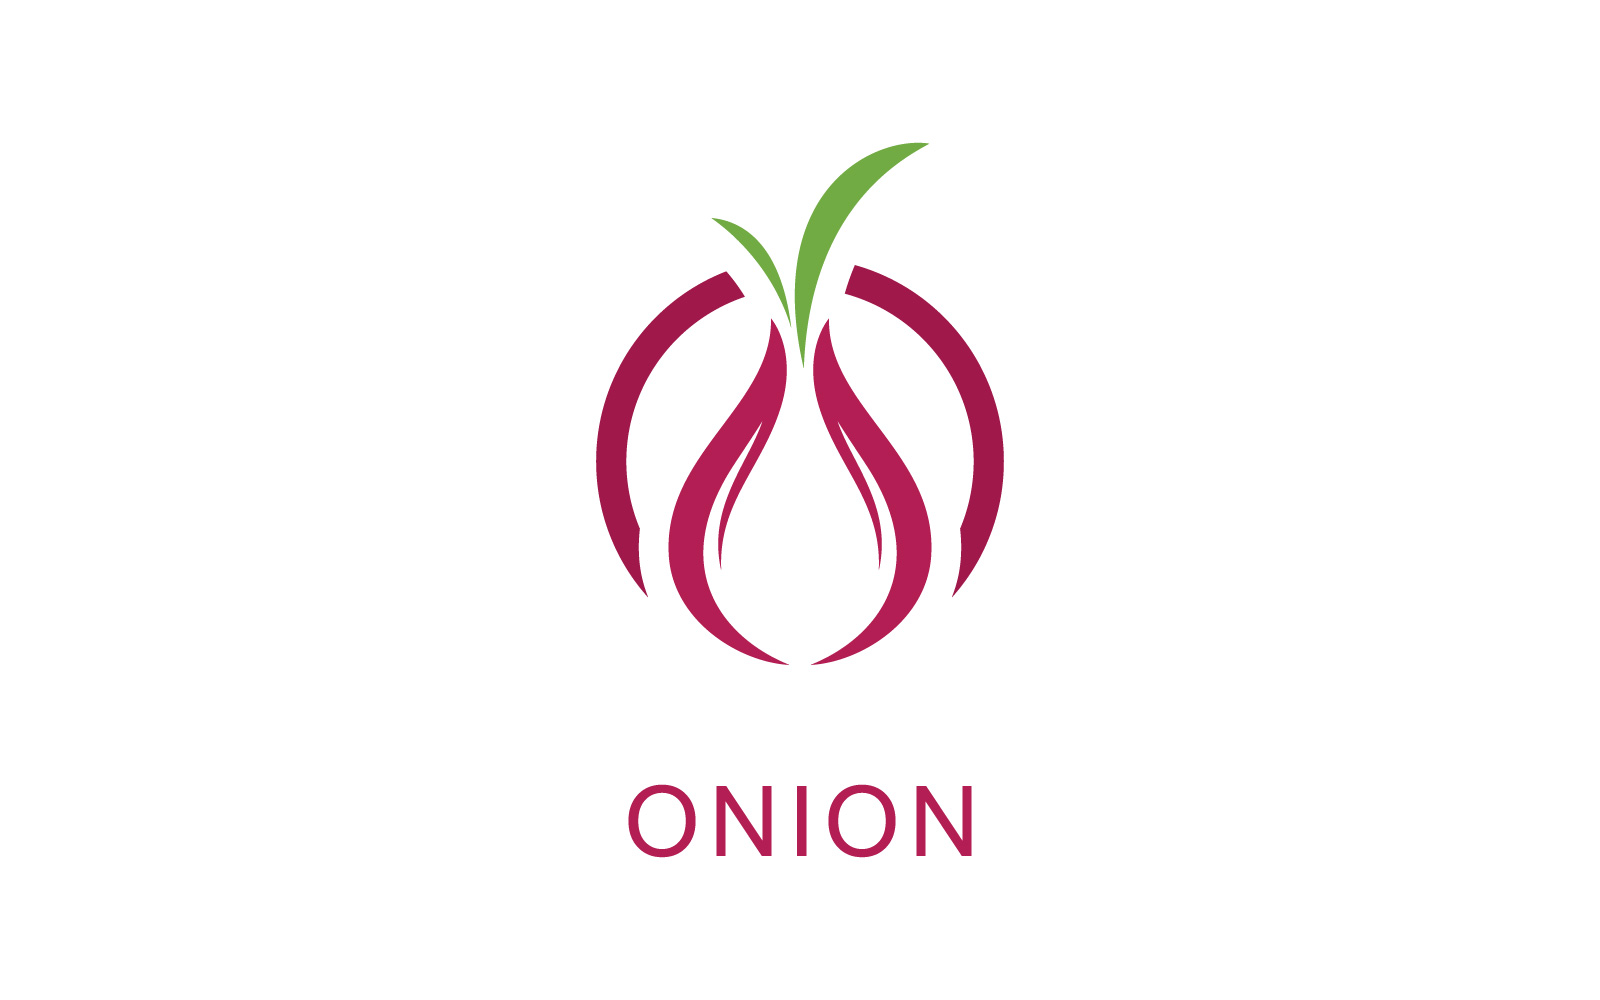 Onion Vector Template. Red Onion Logo Design V7